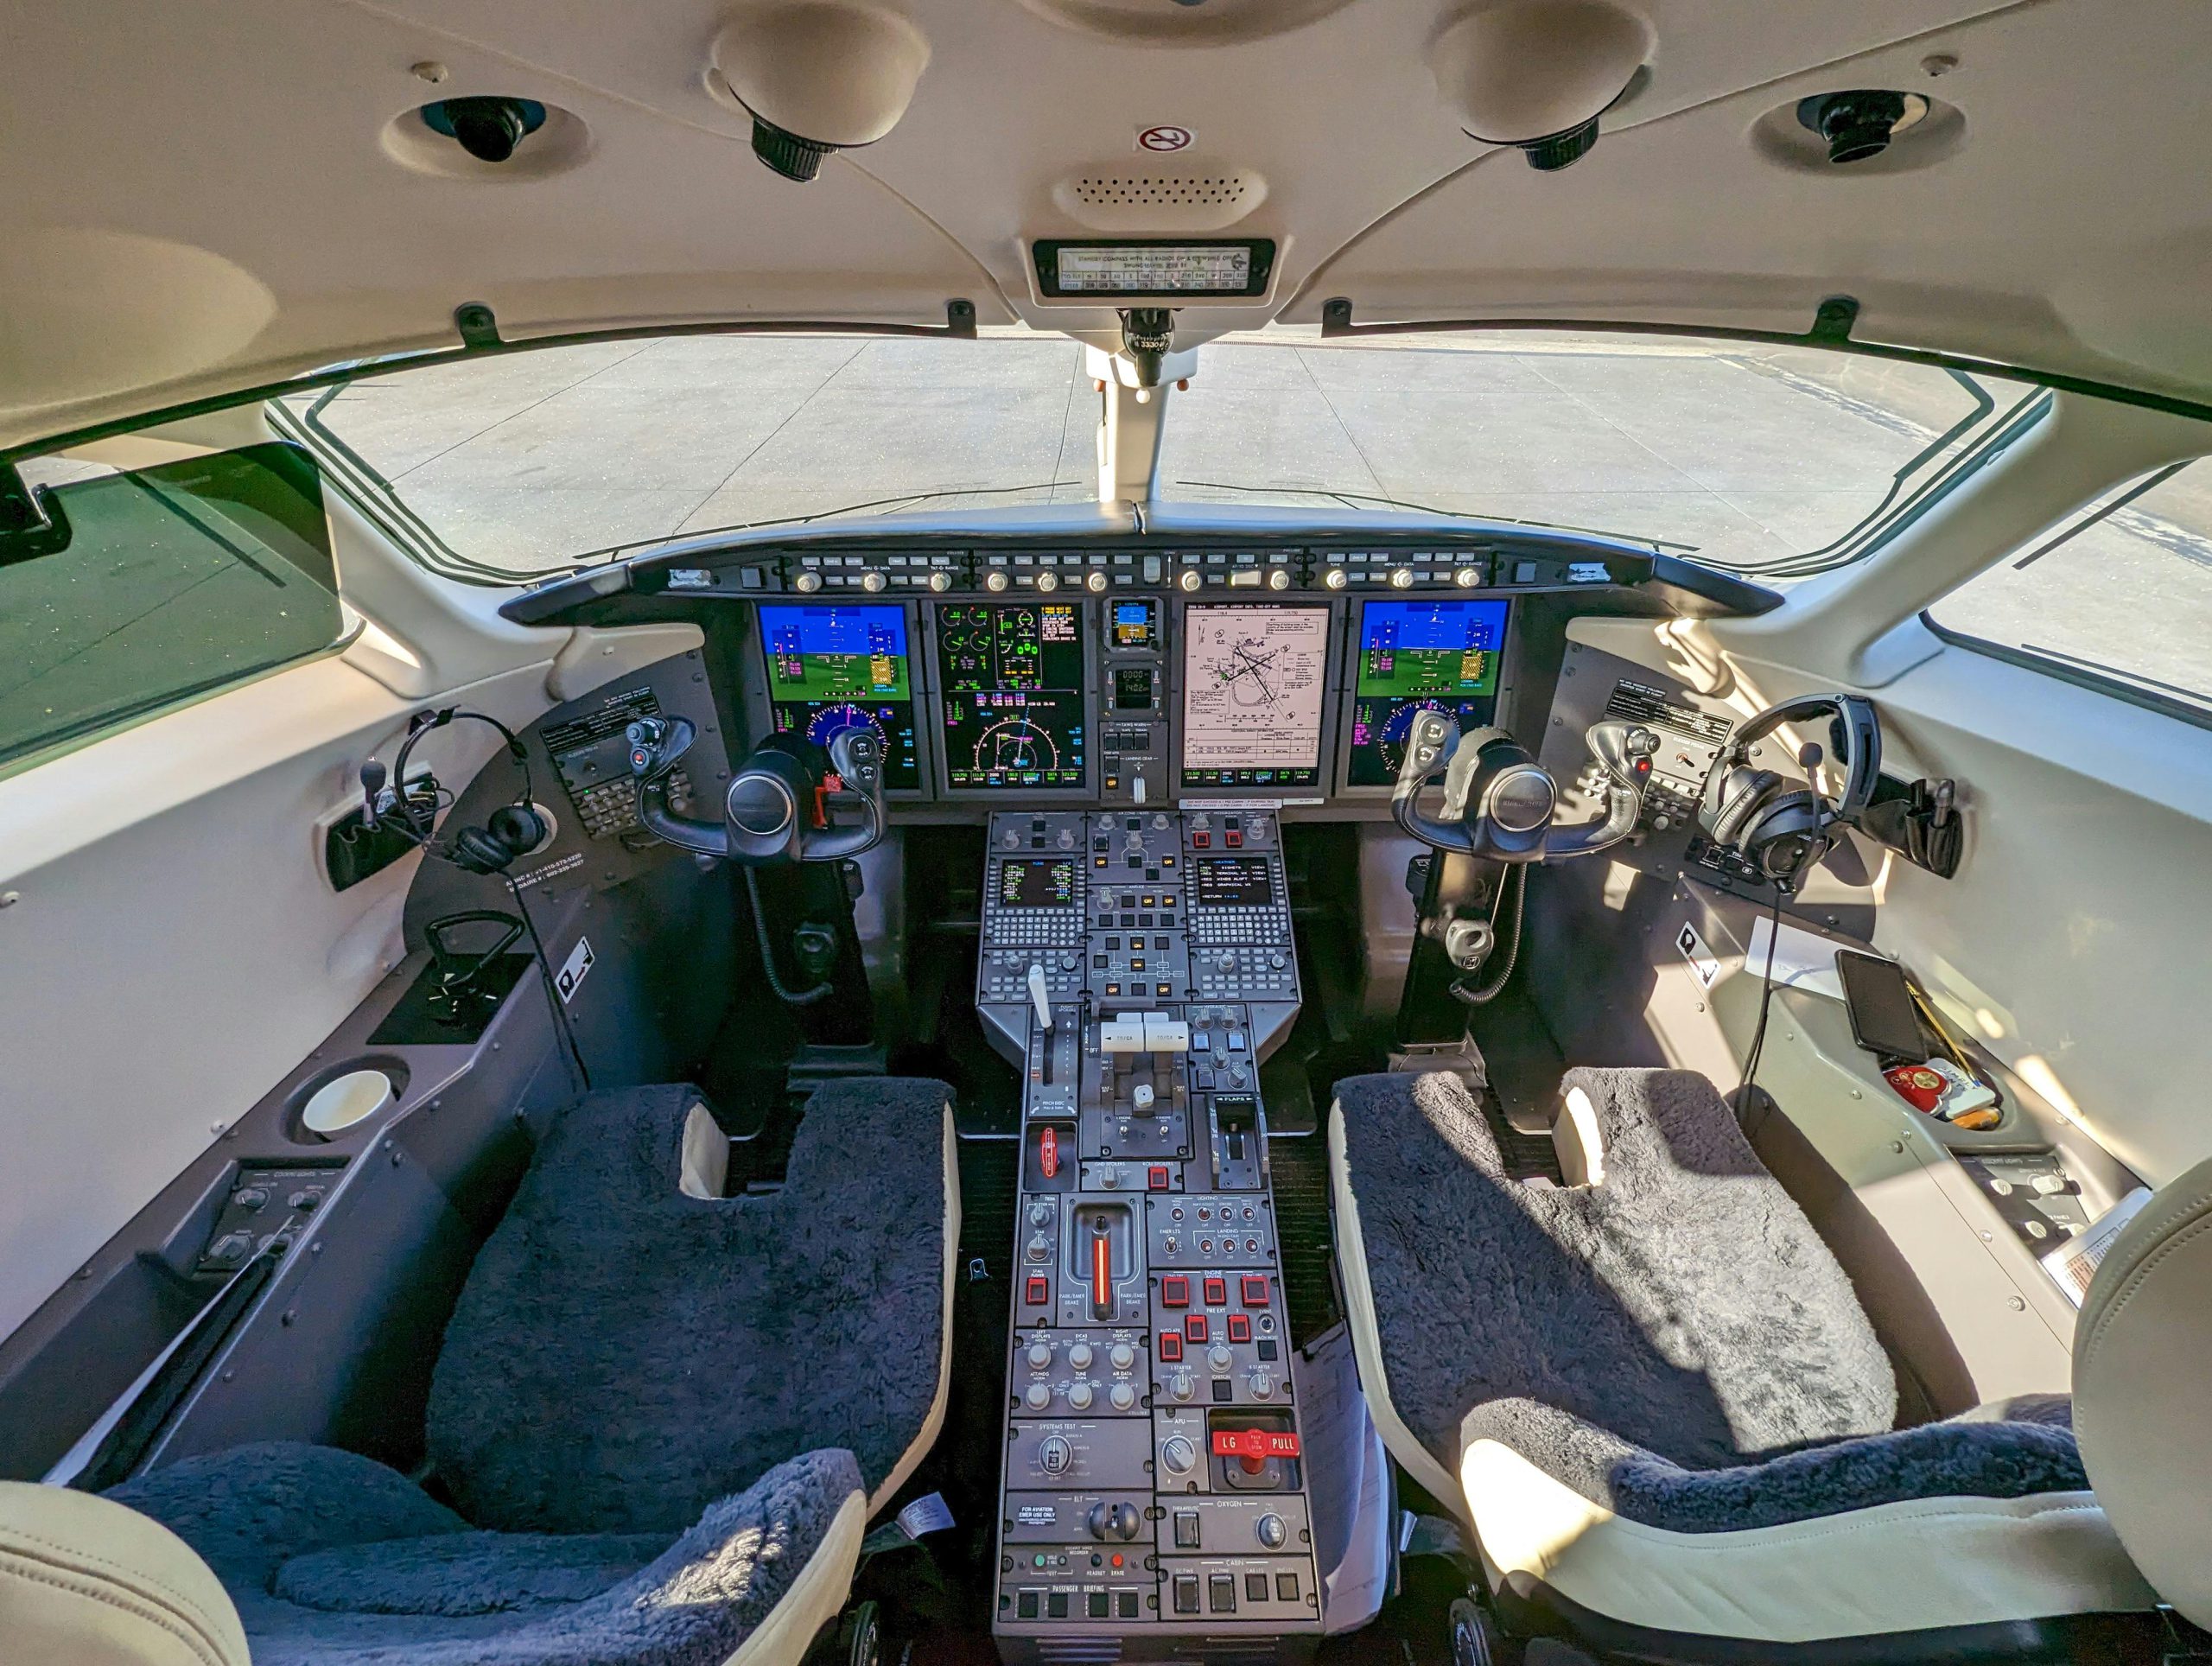 Cockpit, control panel